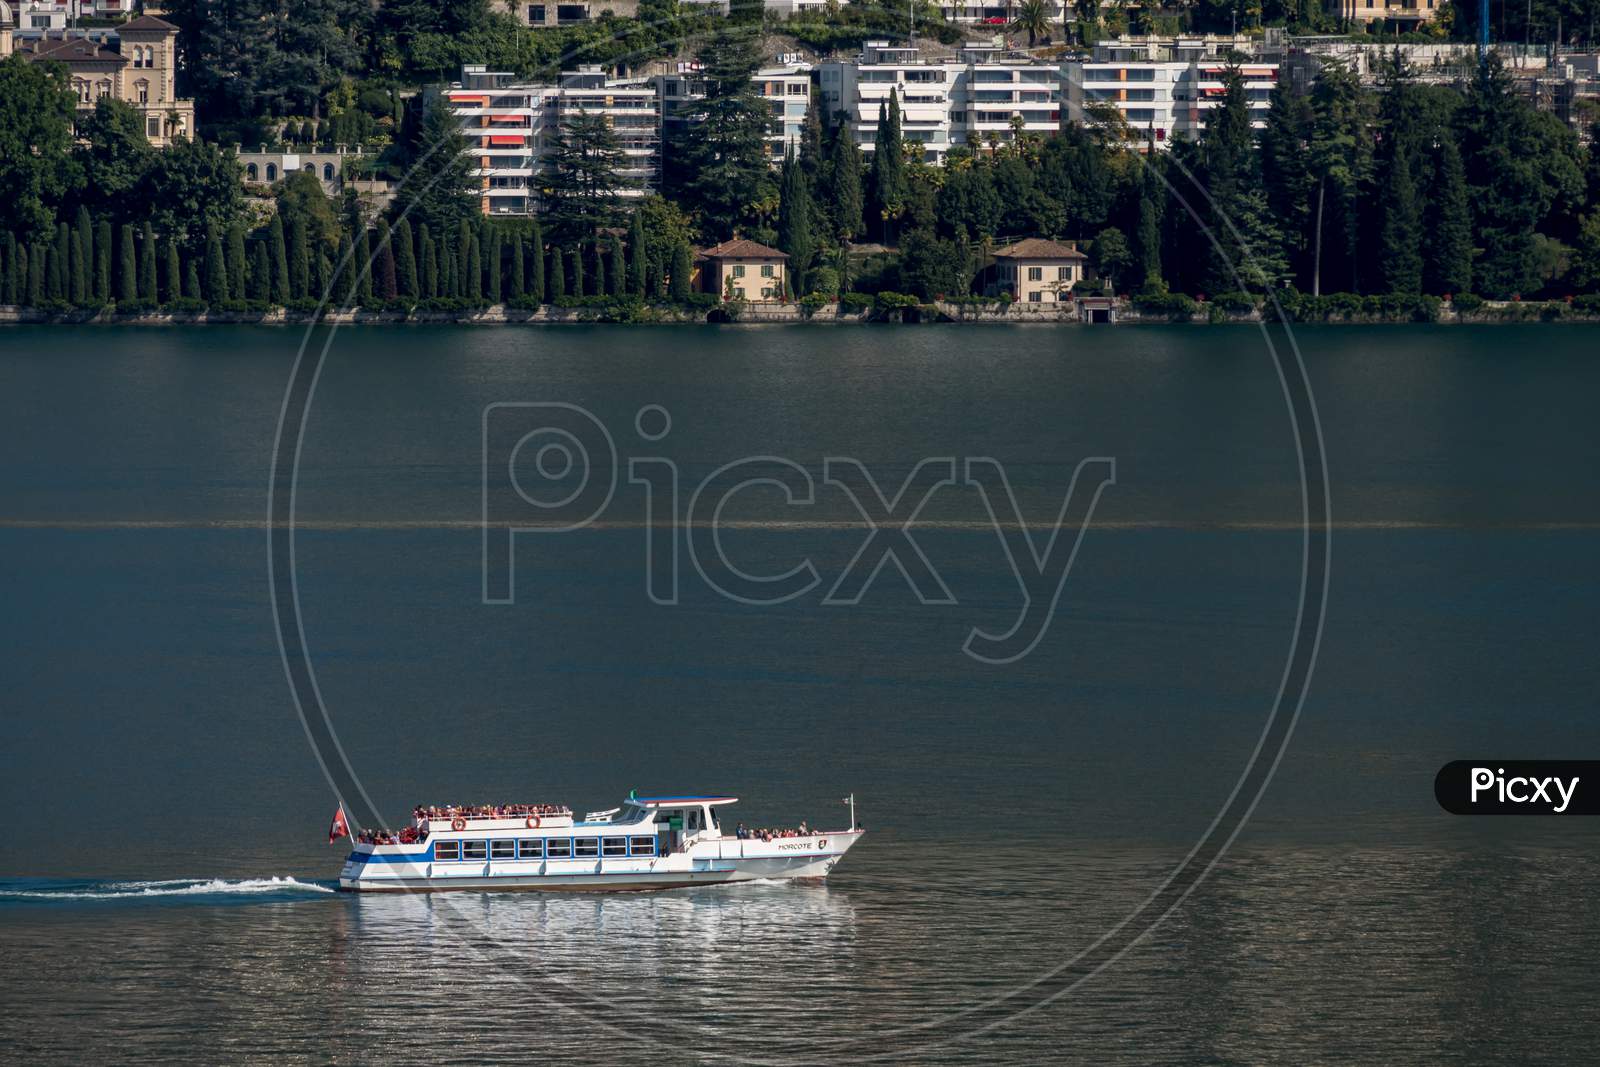 Ferry On Lake Lugano